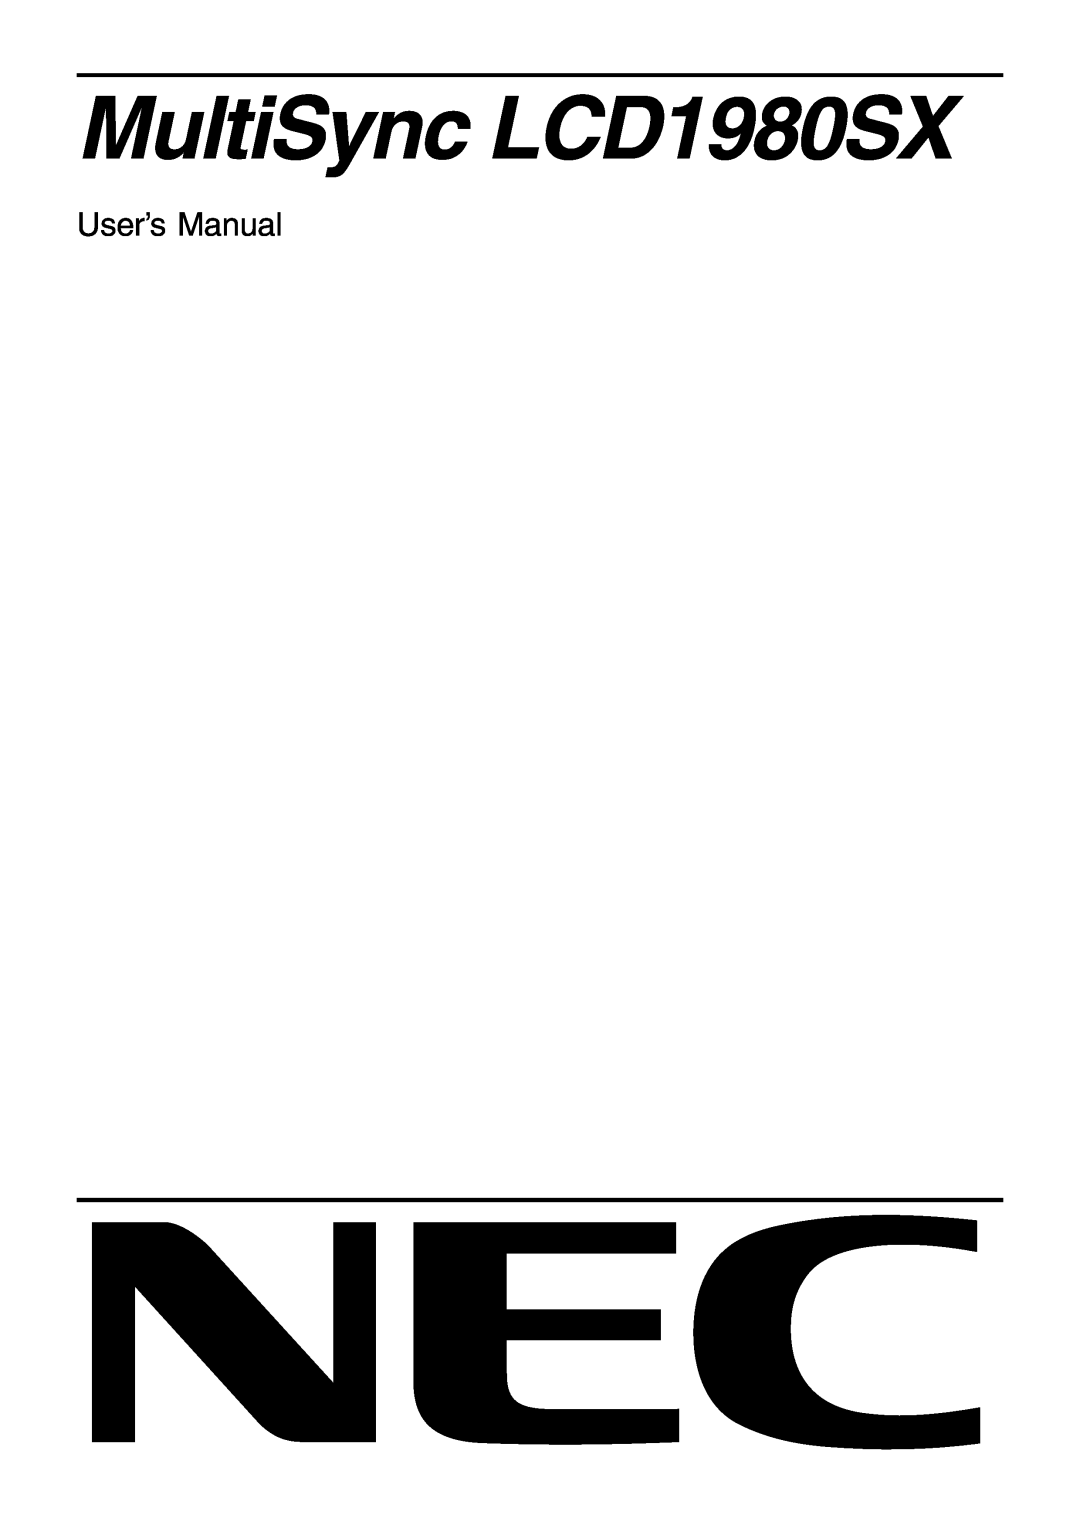 NEC user manual MultiSync LCD1980SX, User’s Manual 